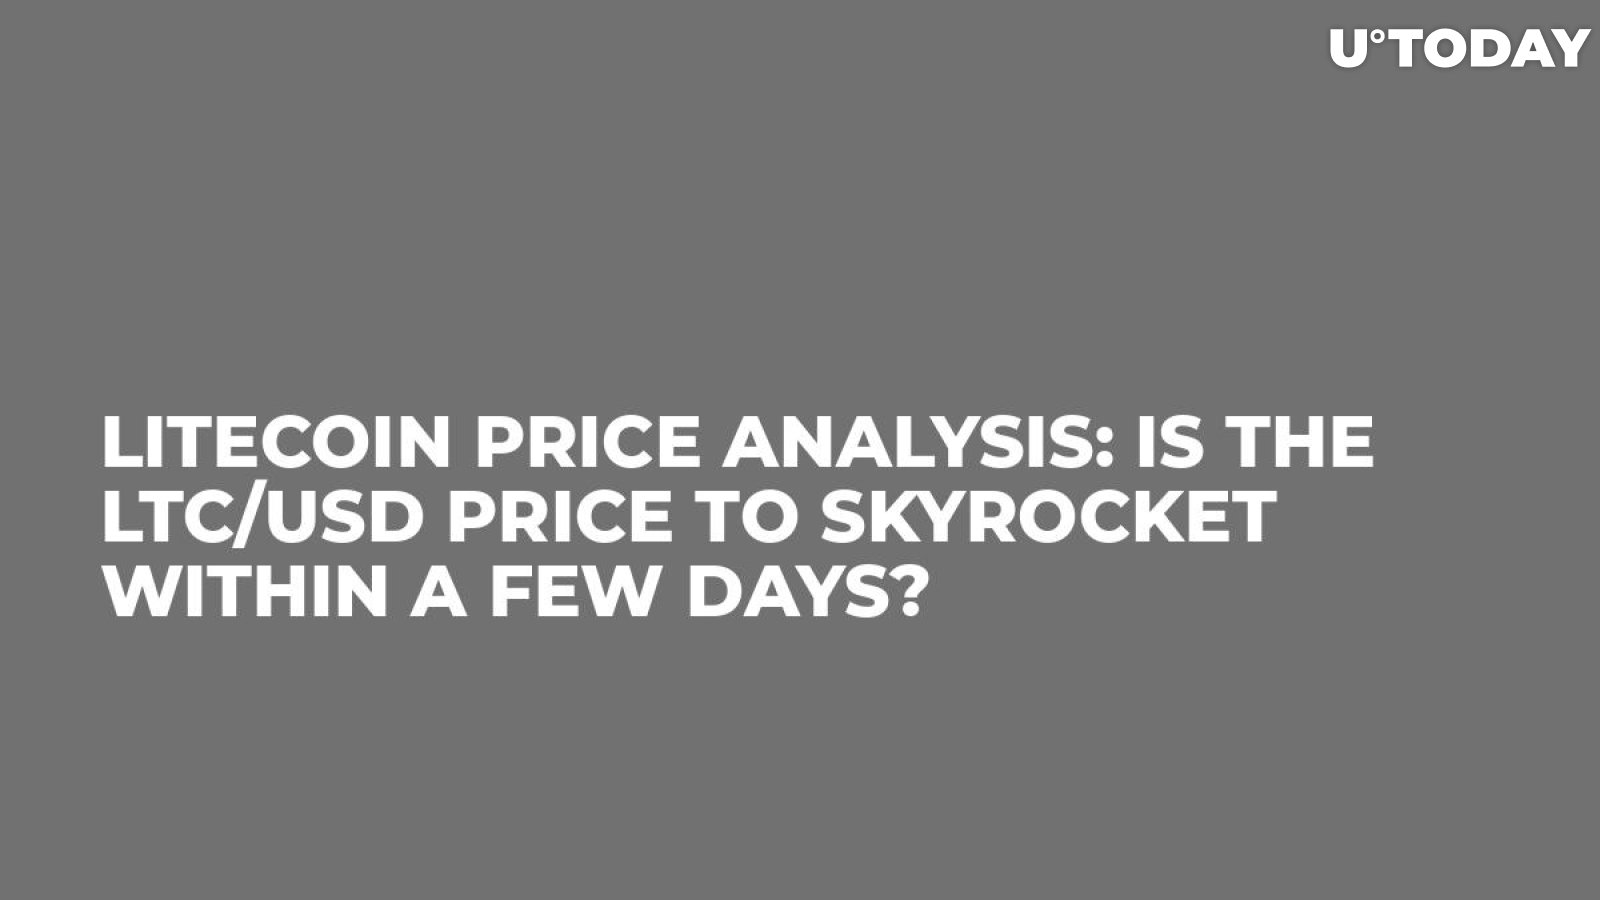 Litecoin Price Analysis: Is the LTC/USD Price to Skyrocket Within a Few Days?